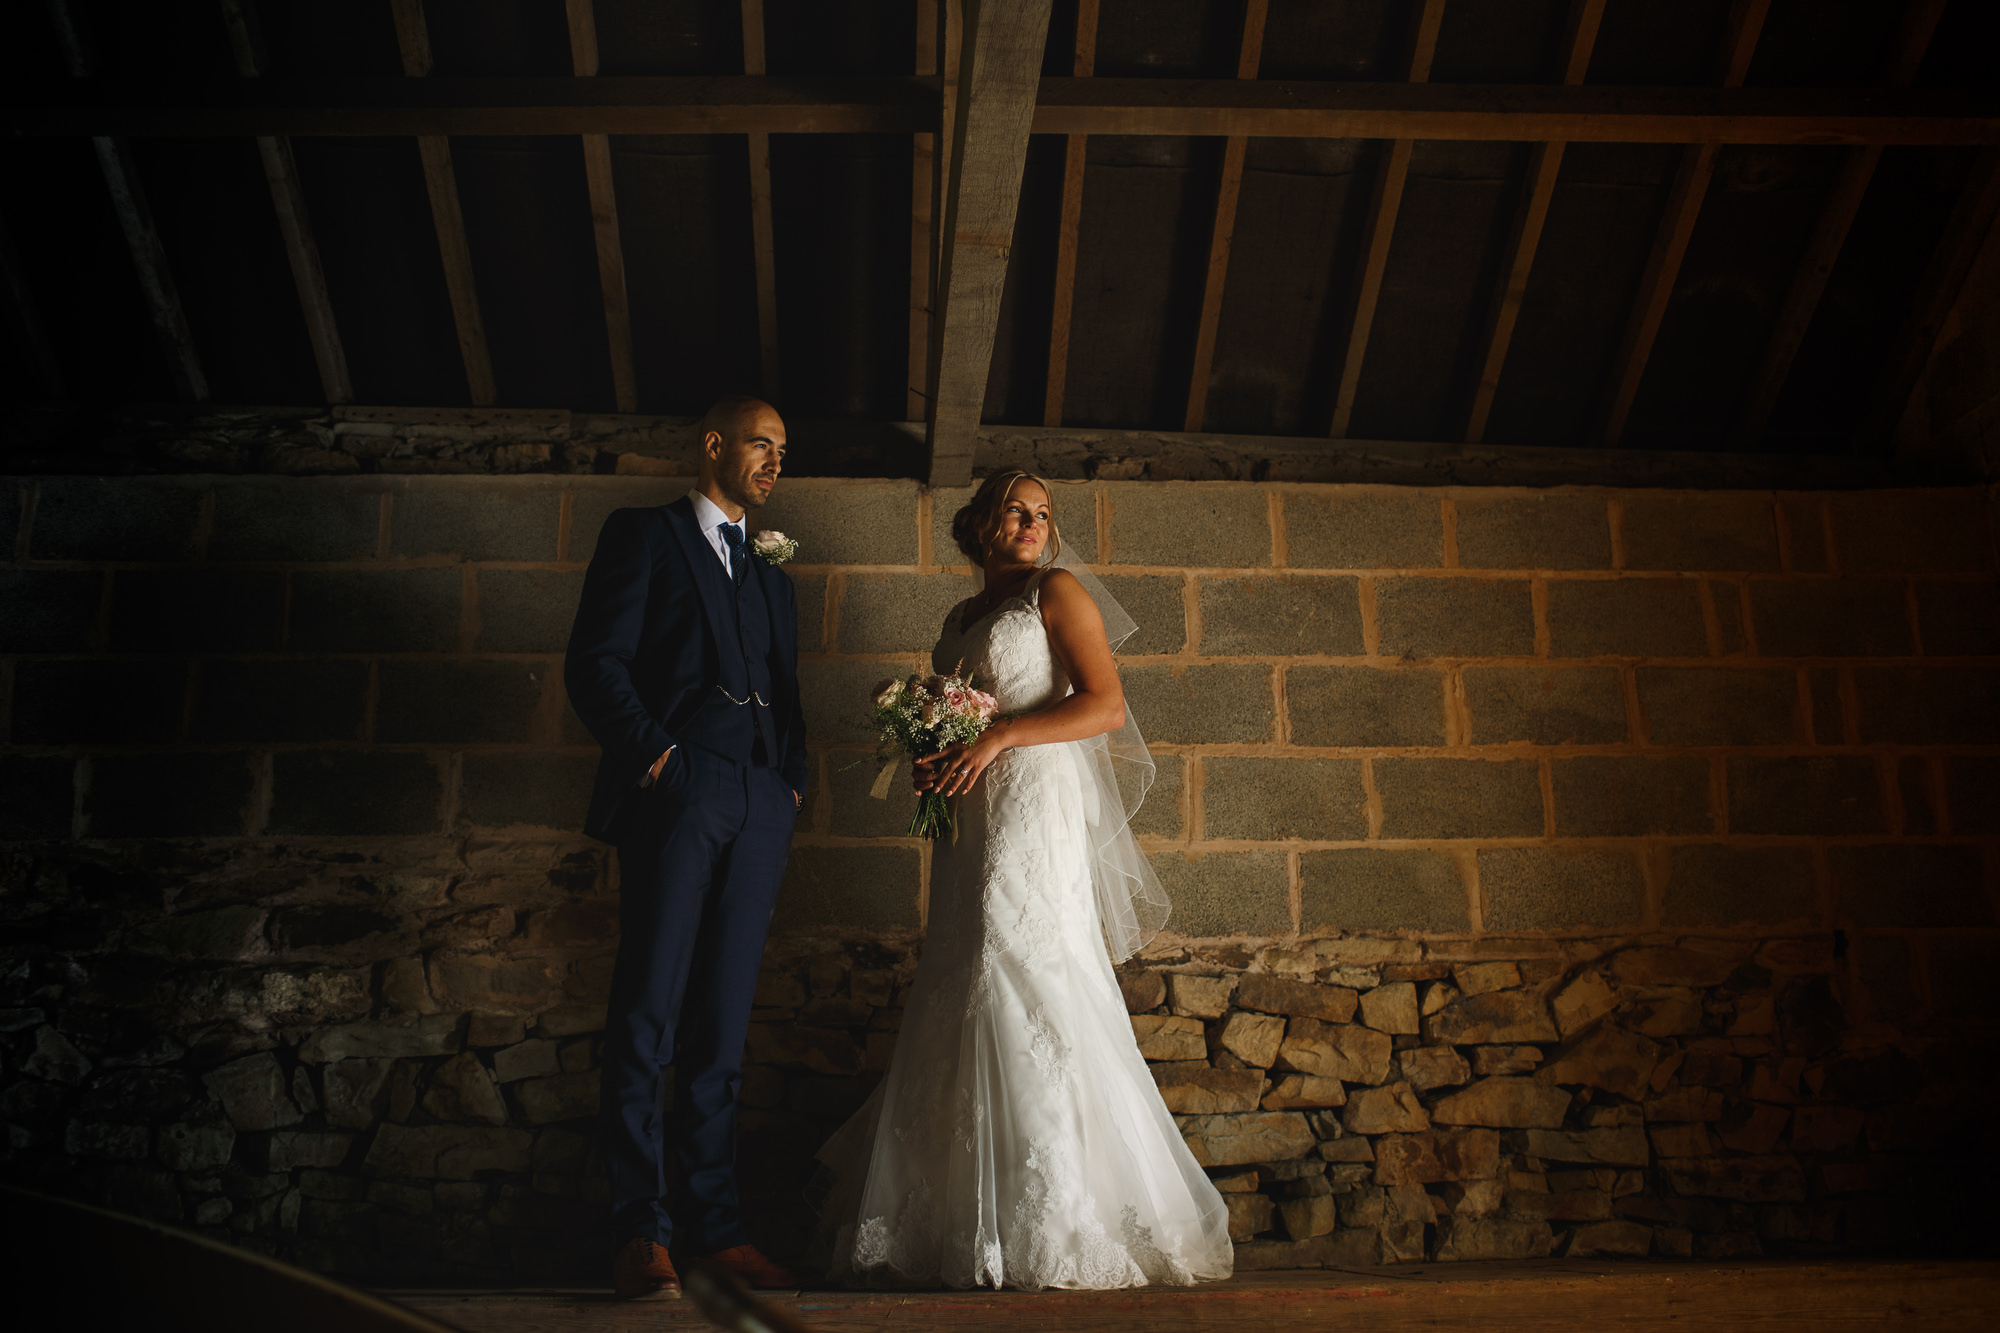 Tithe barn wedding photography lancashire